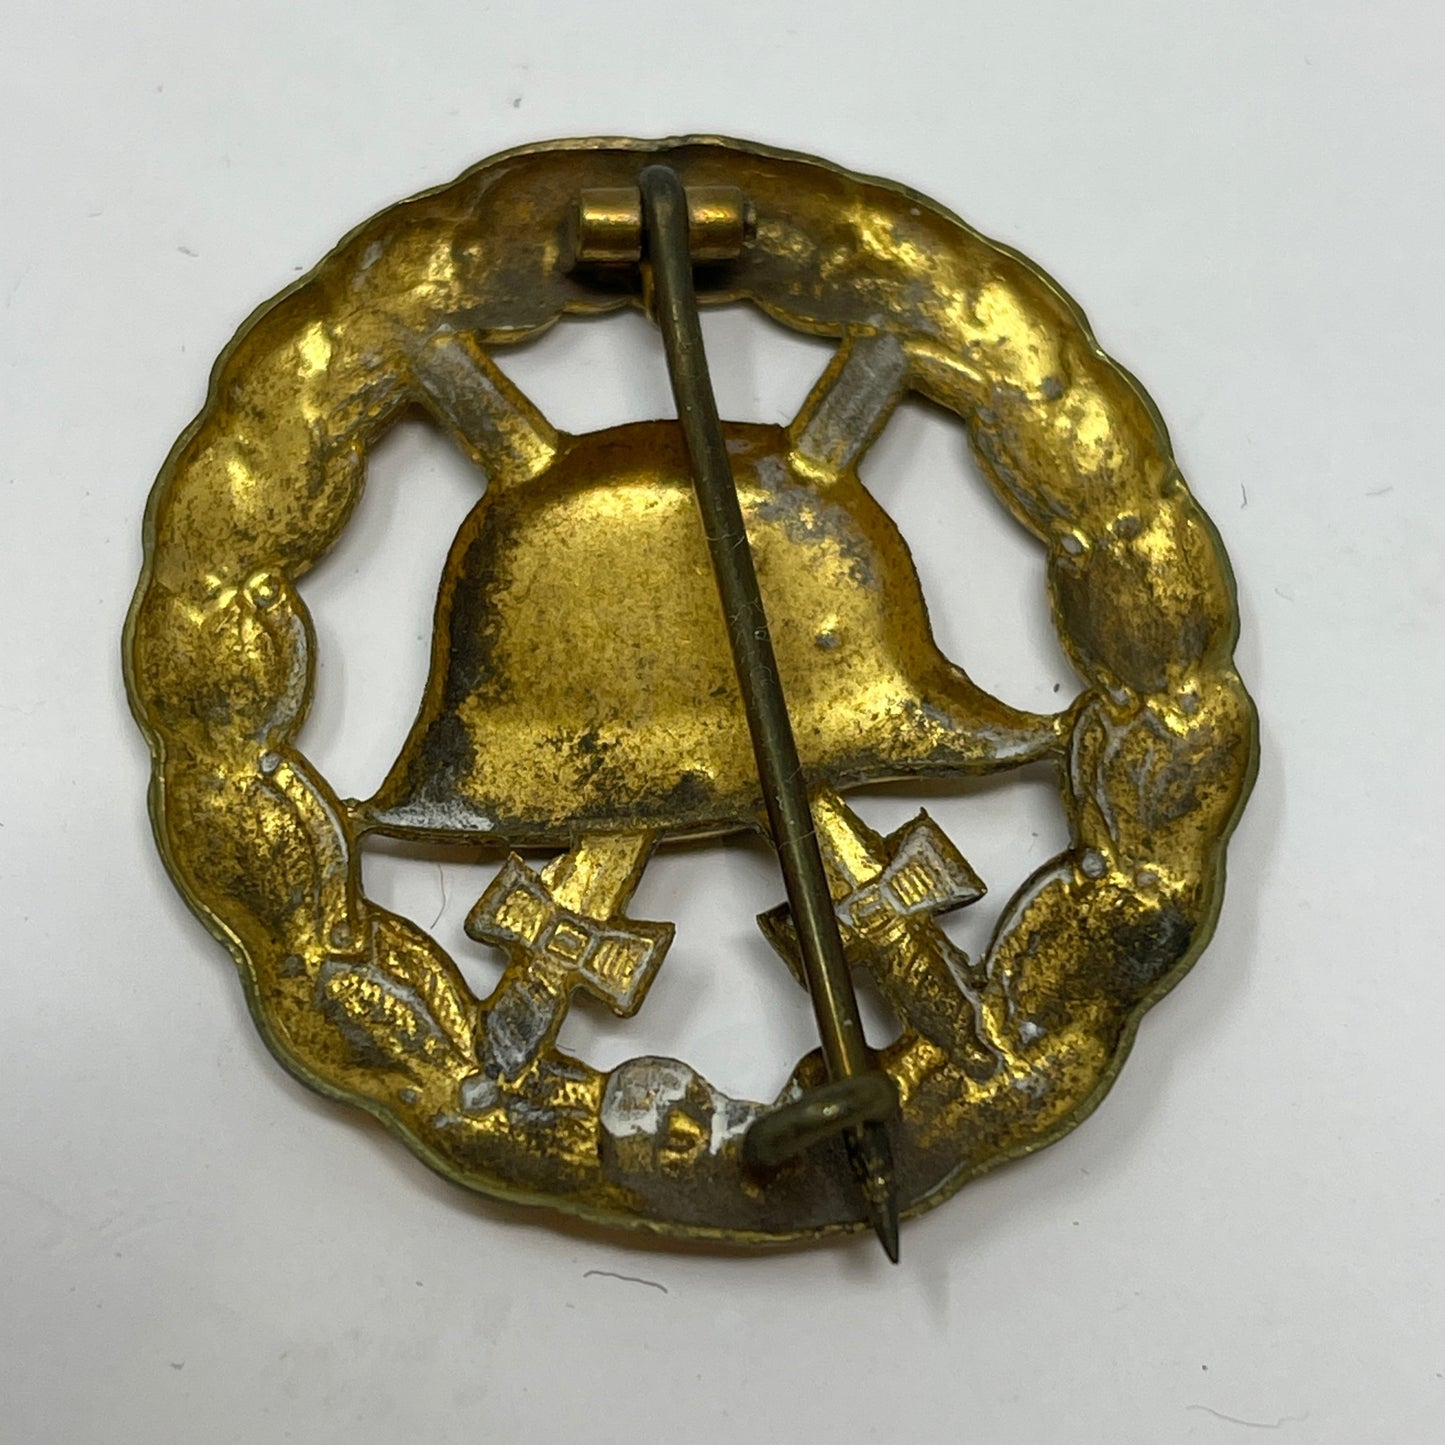 German, Gold Wound Badge, 1914-18,